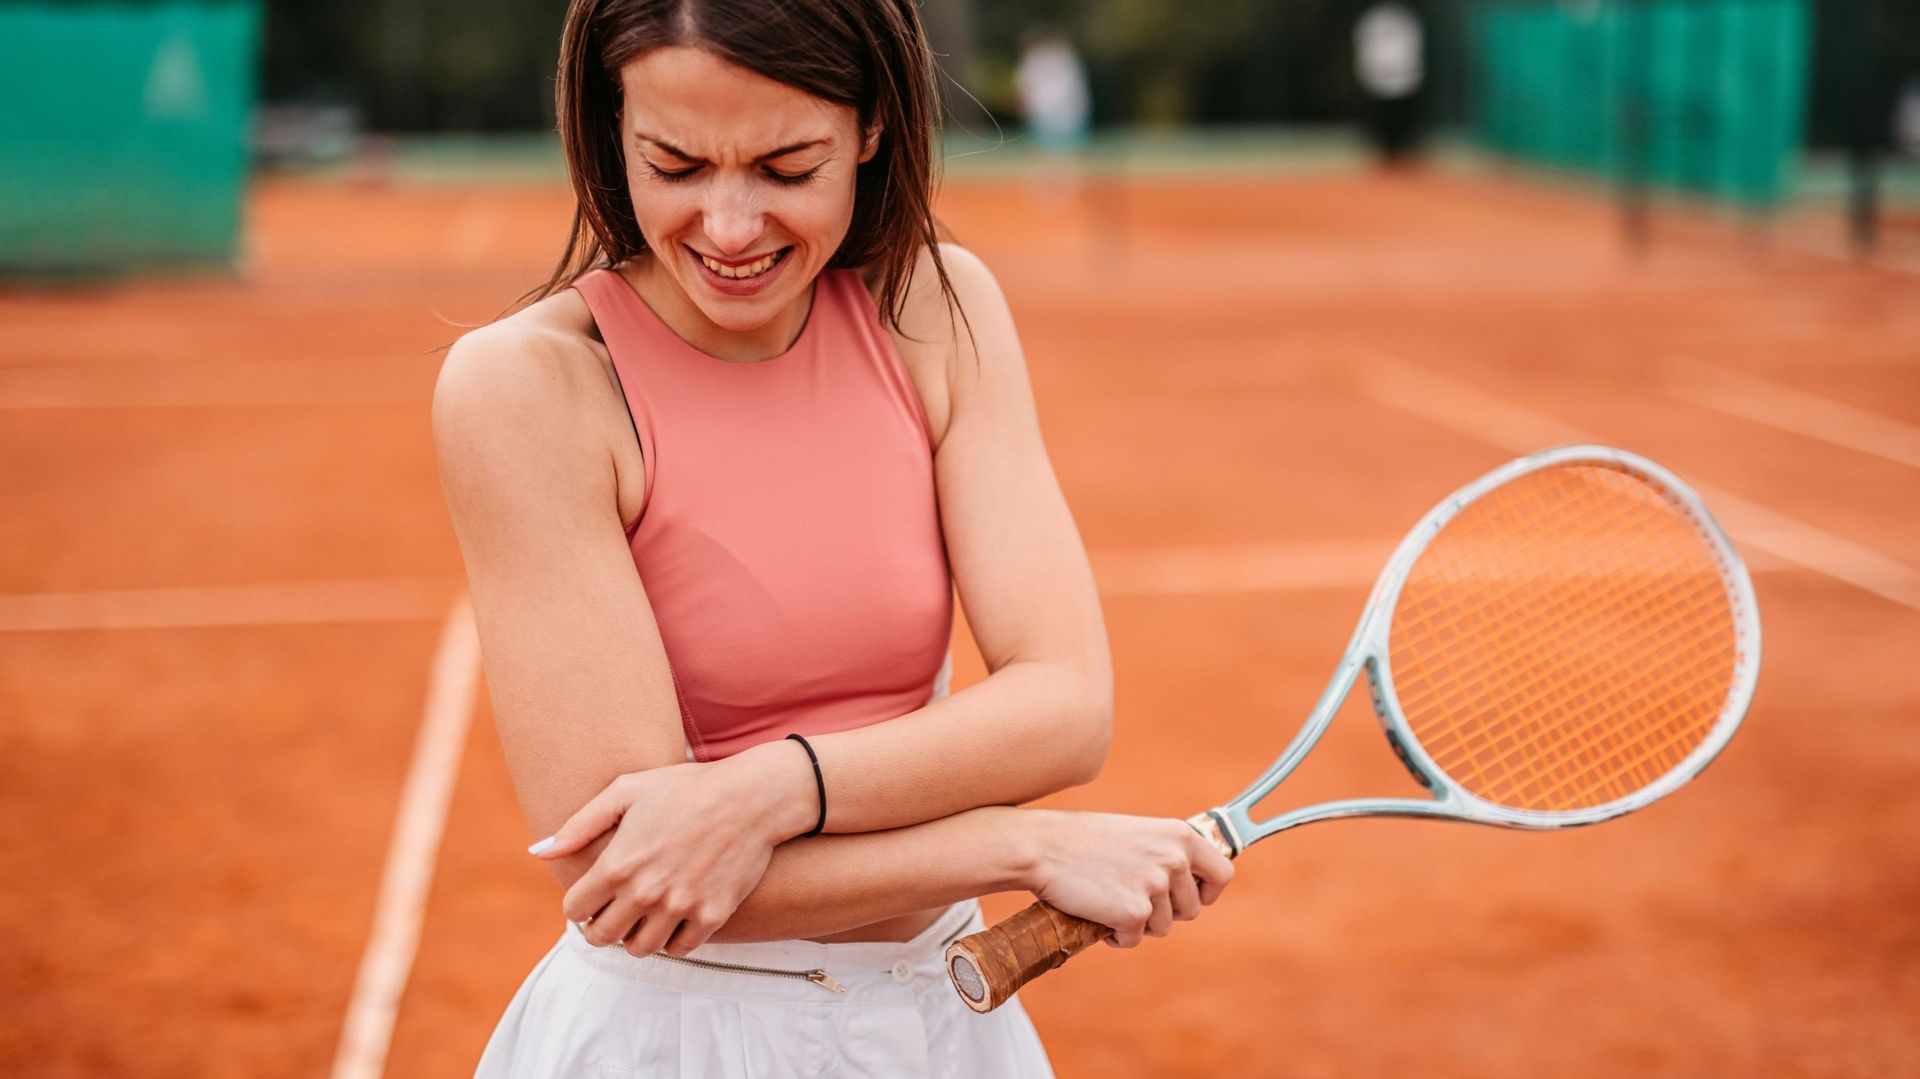 Le tennis-elbow : c’est quoi exactement ?